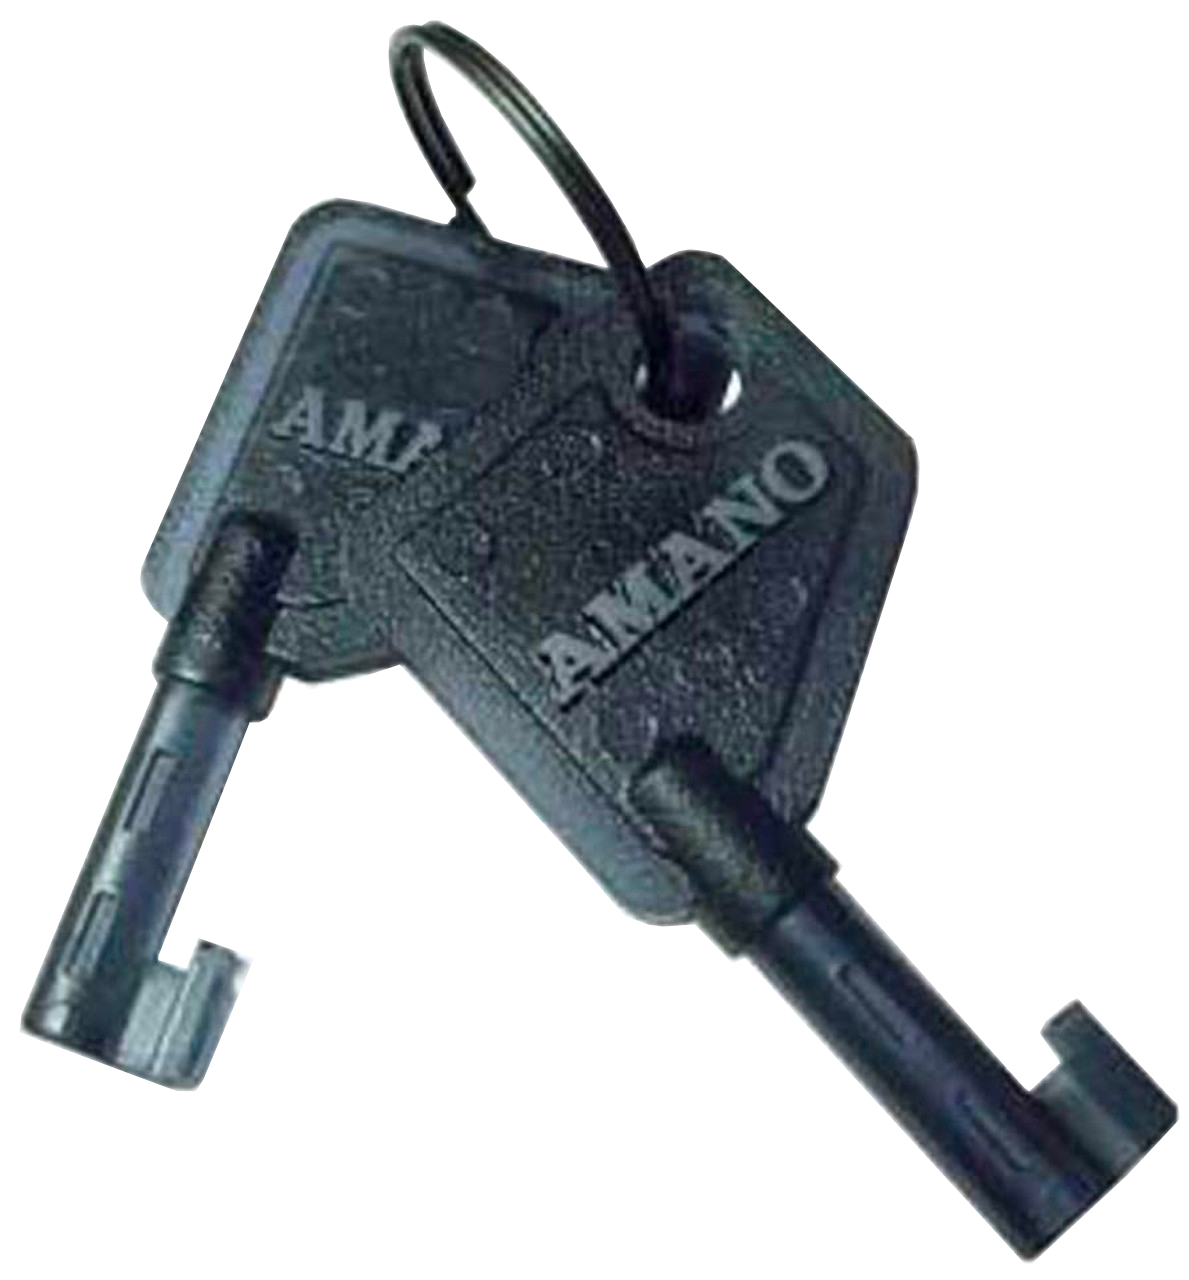 Amano AJR-201150 Plastic Keys for Amano Time Clocks